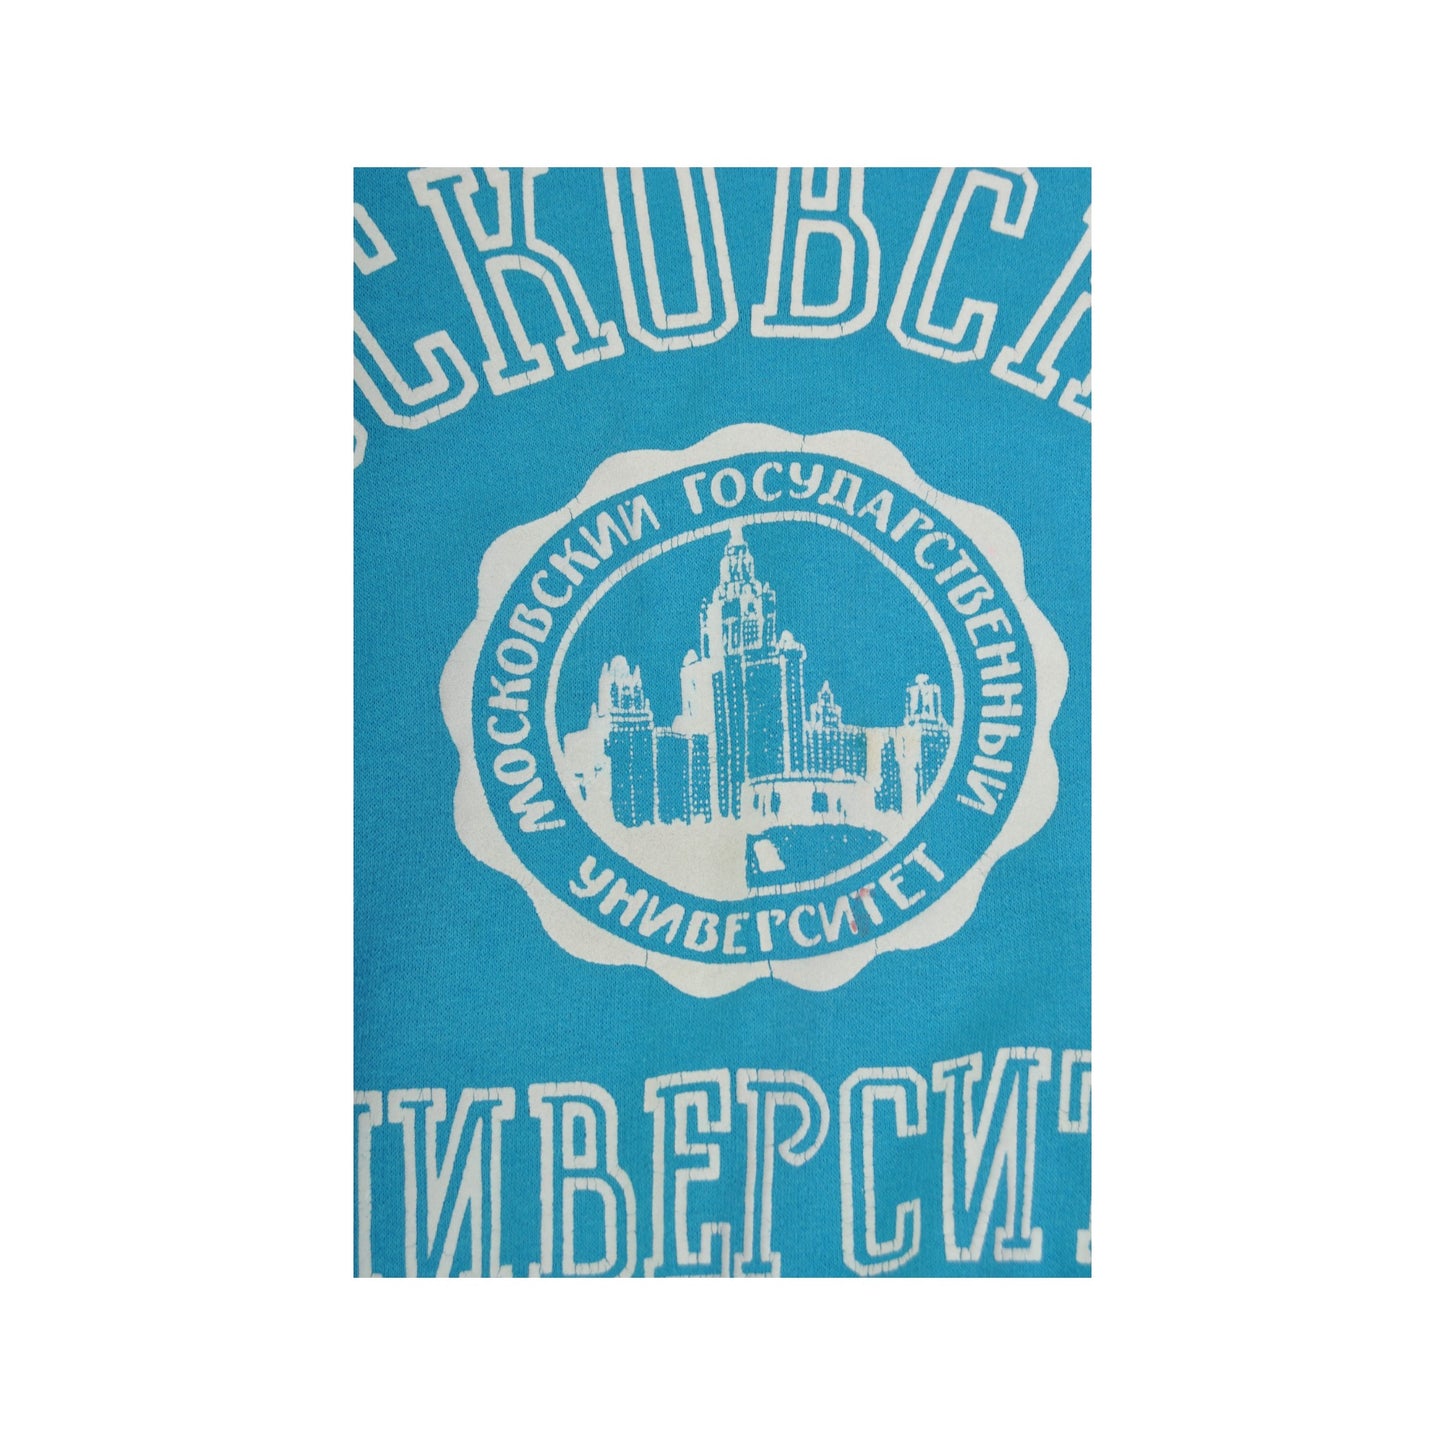 Vintage Moscow Crew Neck Sweatshirt Blue Ladies Medium